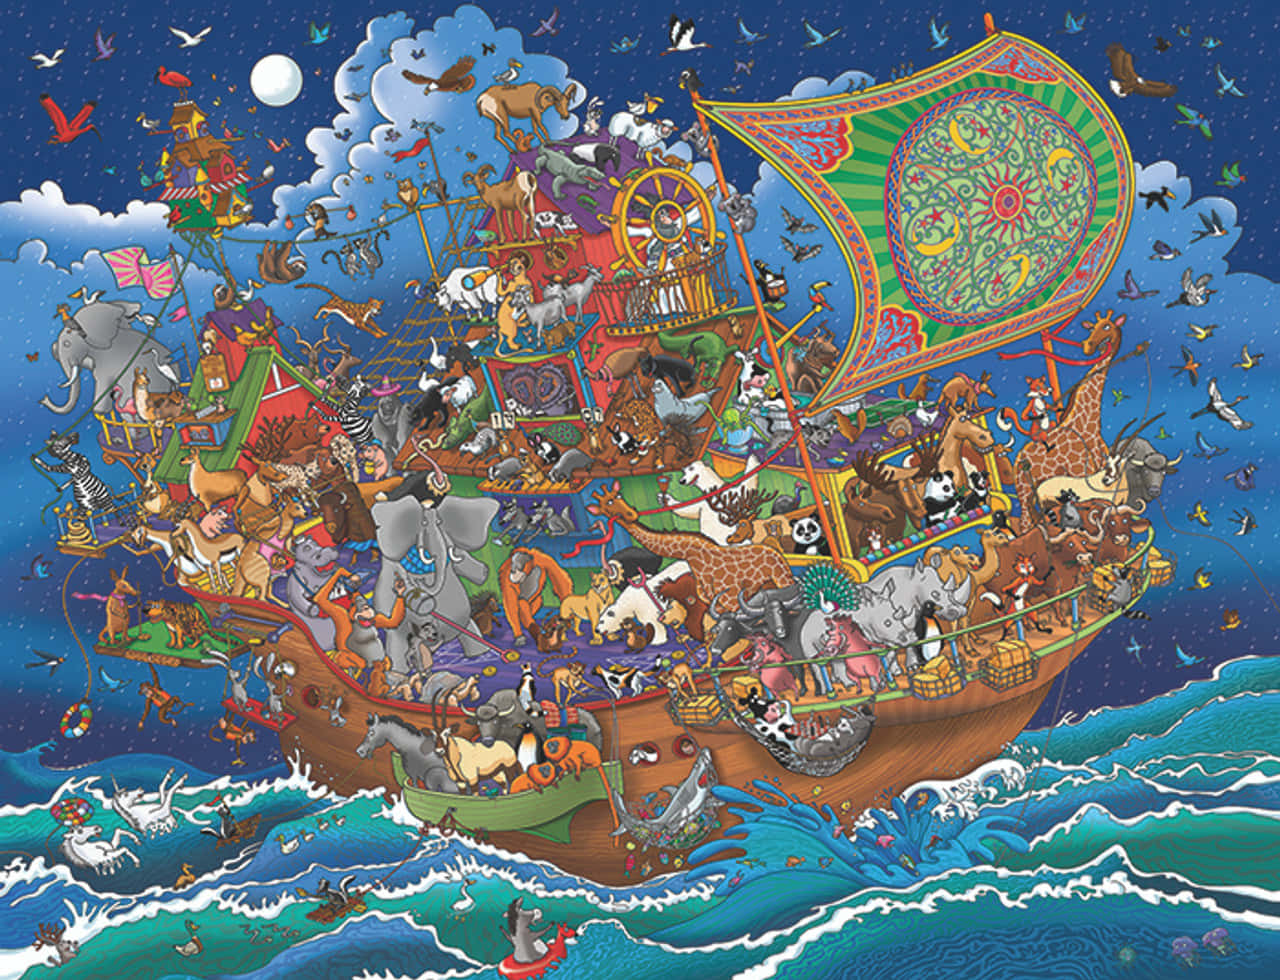 Noah and His Ark Begin the Long Voyage